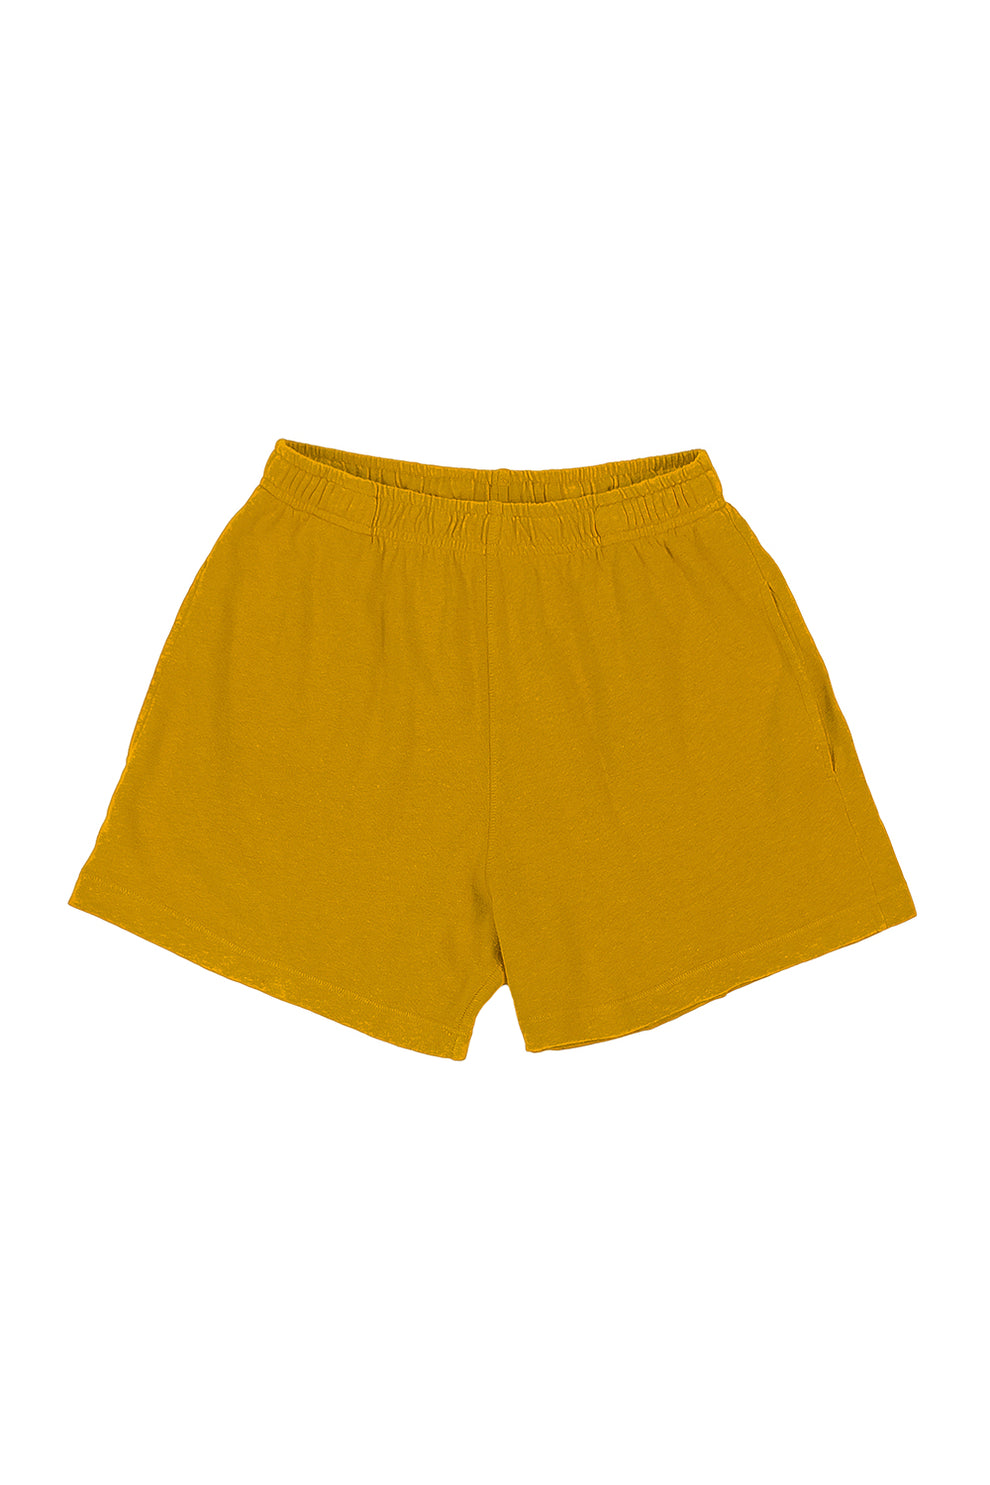 Sun Shorts | Jungmaven Hemp Clothing & Accessories